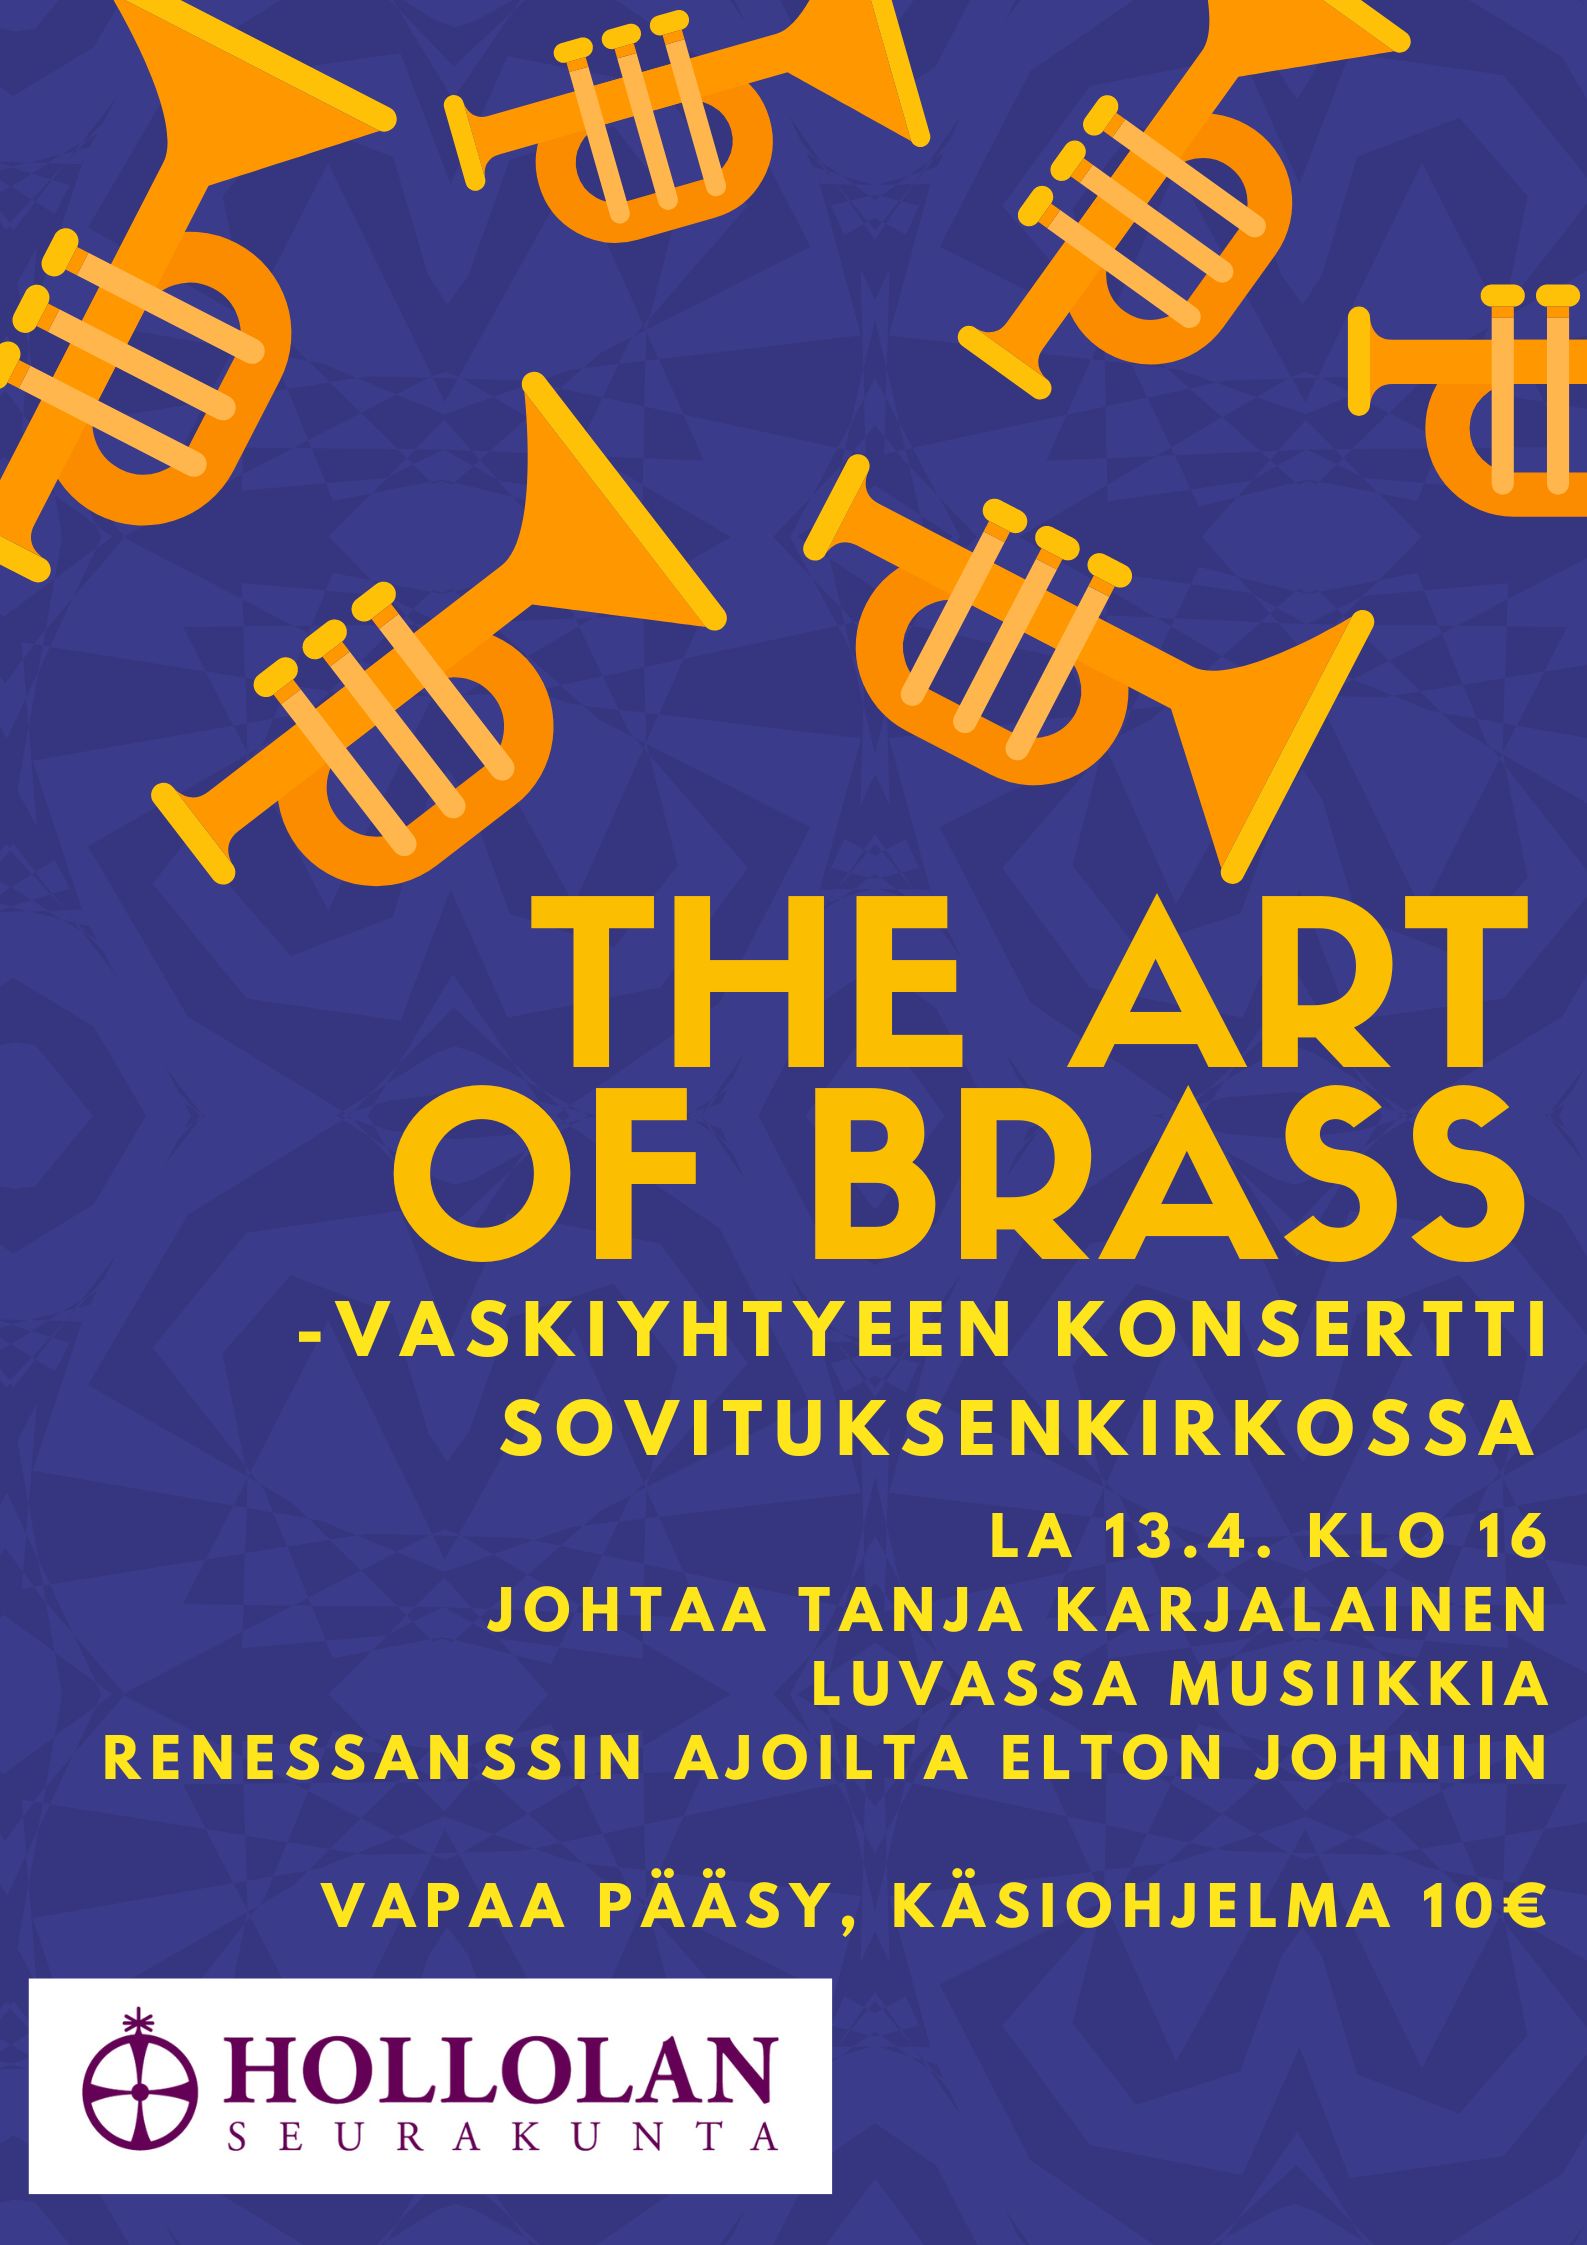 the art of brass -konsertin juliste